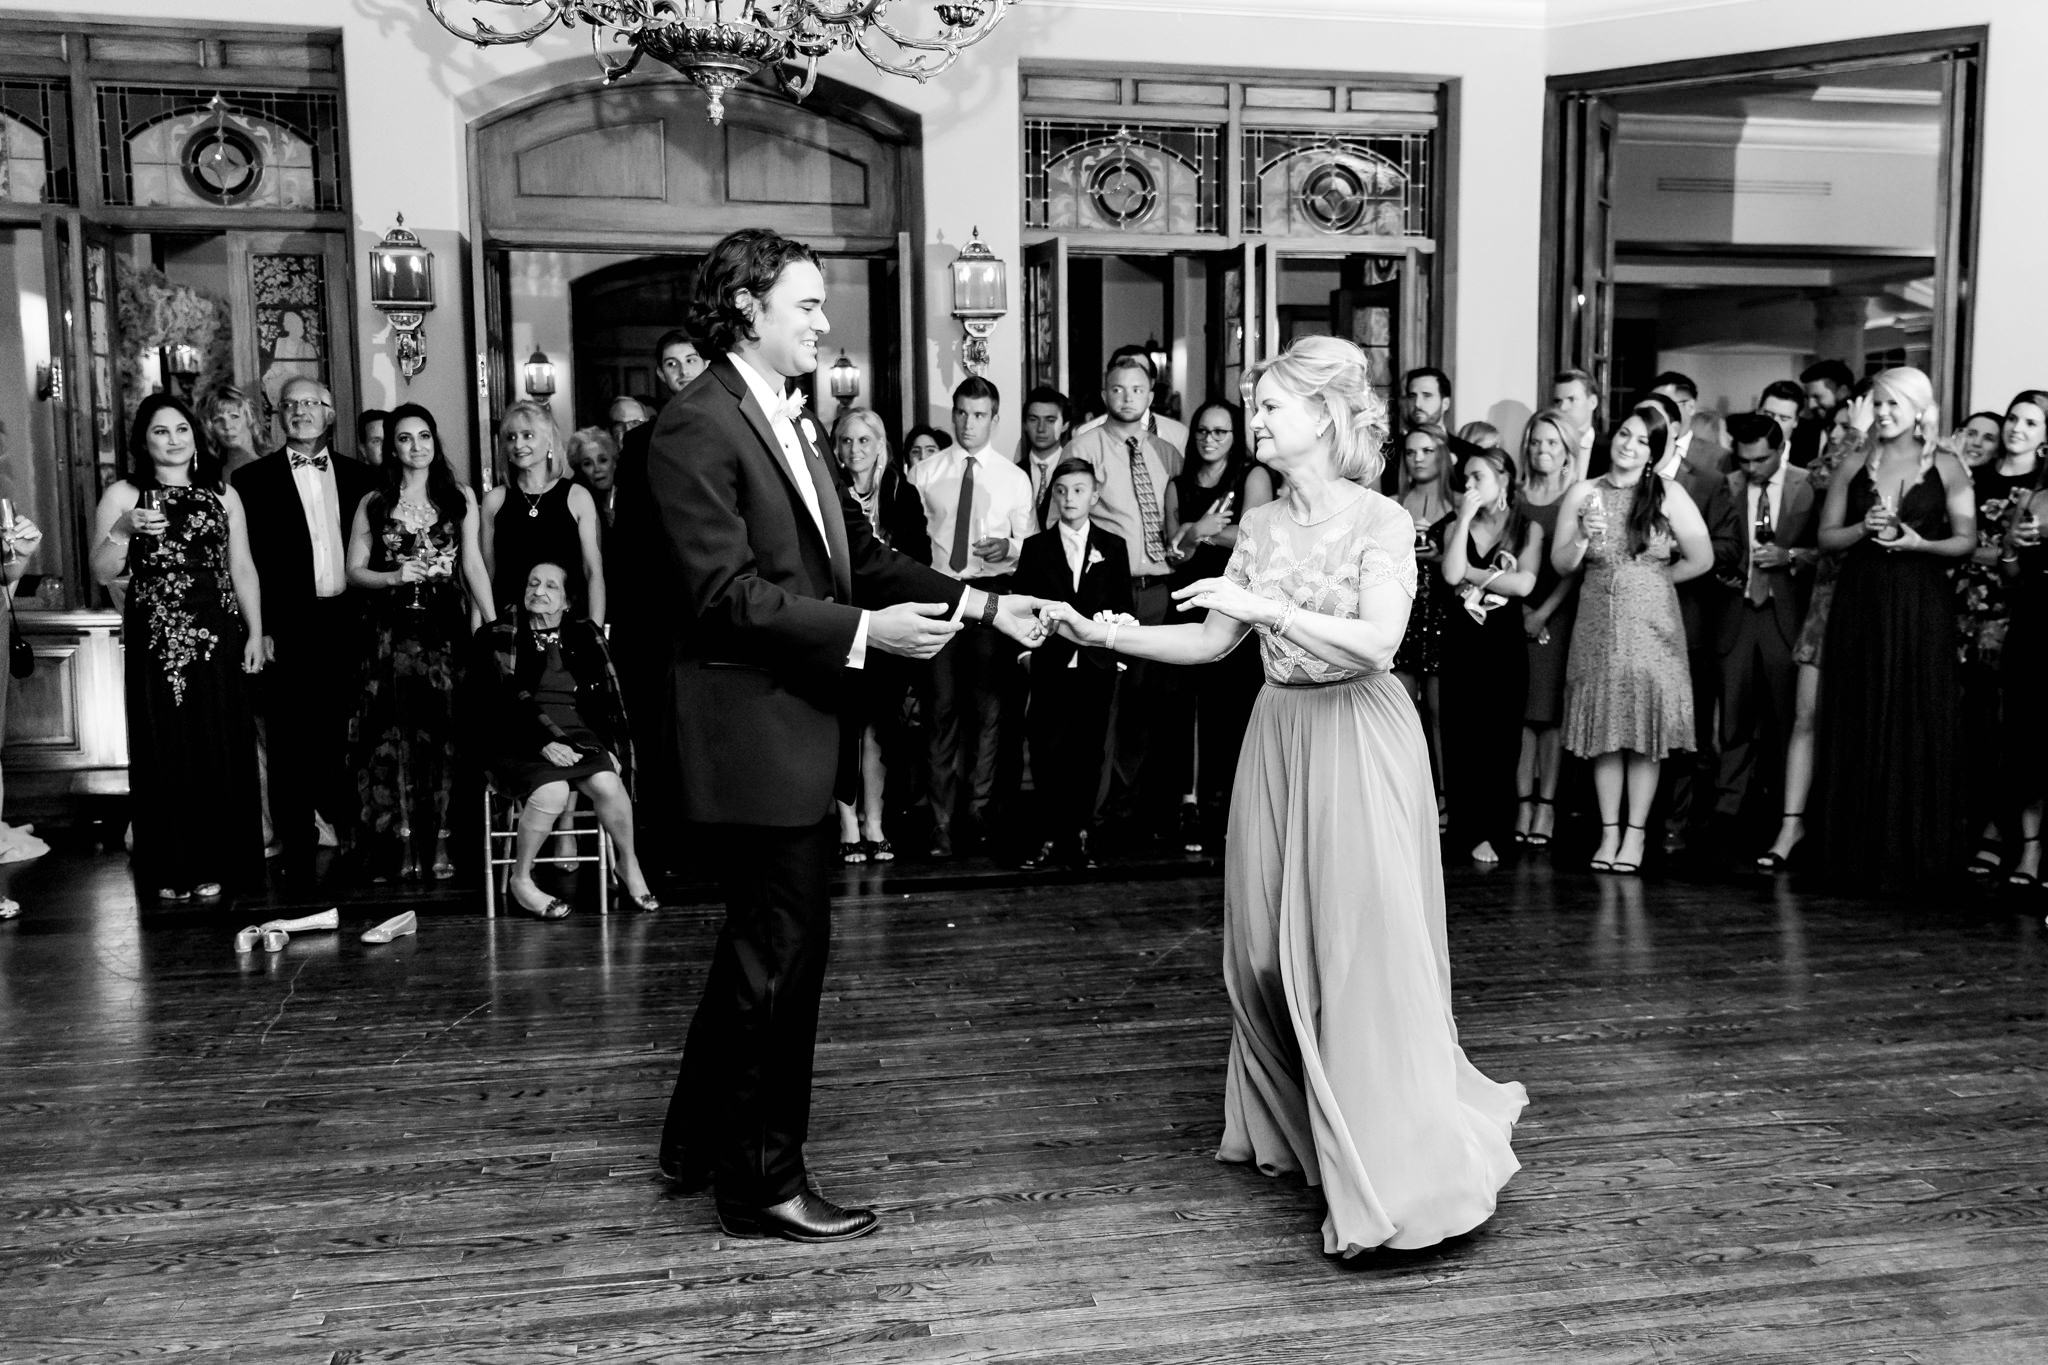 An Ivory and Gold Wedding at The Dominion Country Club by Dawn Elizabeth Studios, San Antonio Wedding Photographer